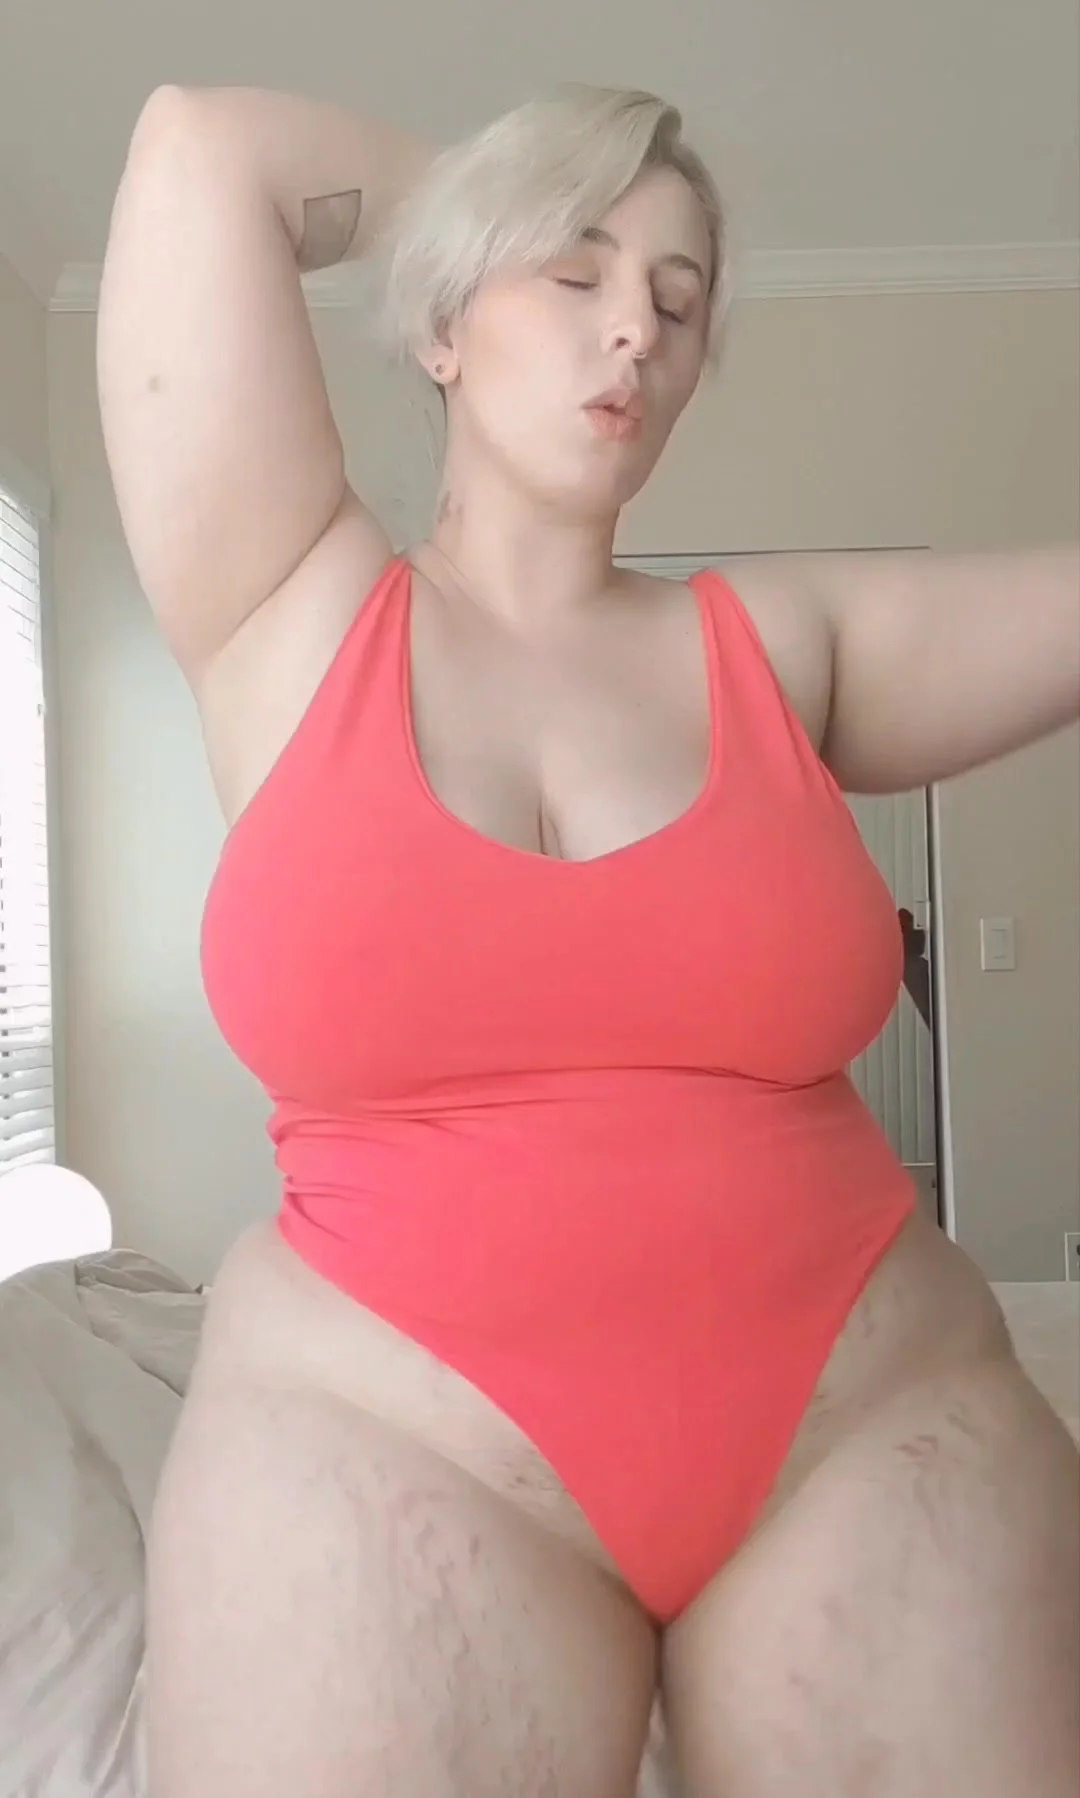 Chubby Slut - Sexy chubby slut - video 2 - ThisVid.com